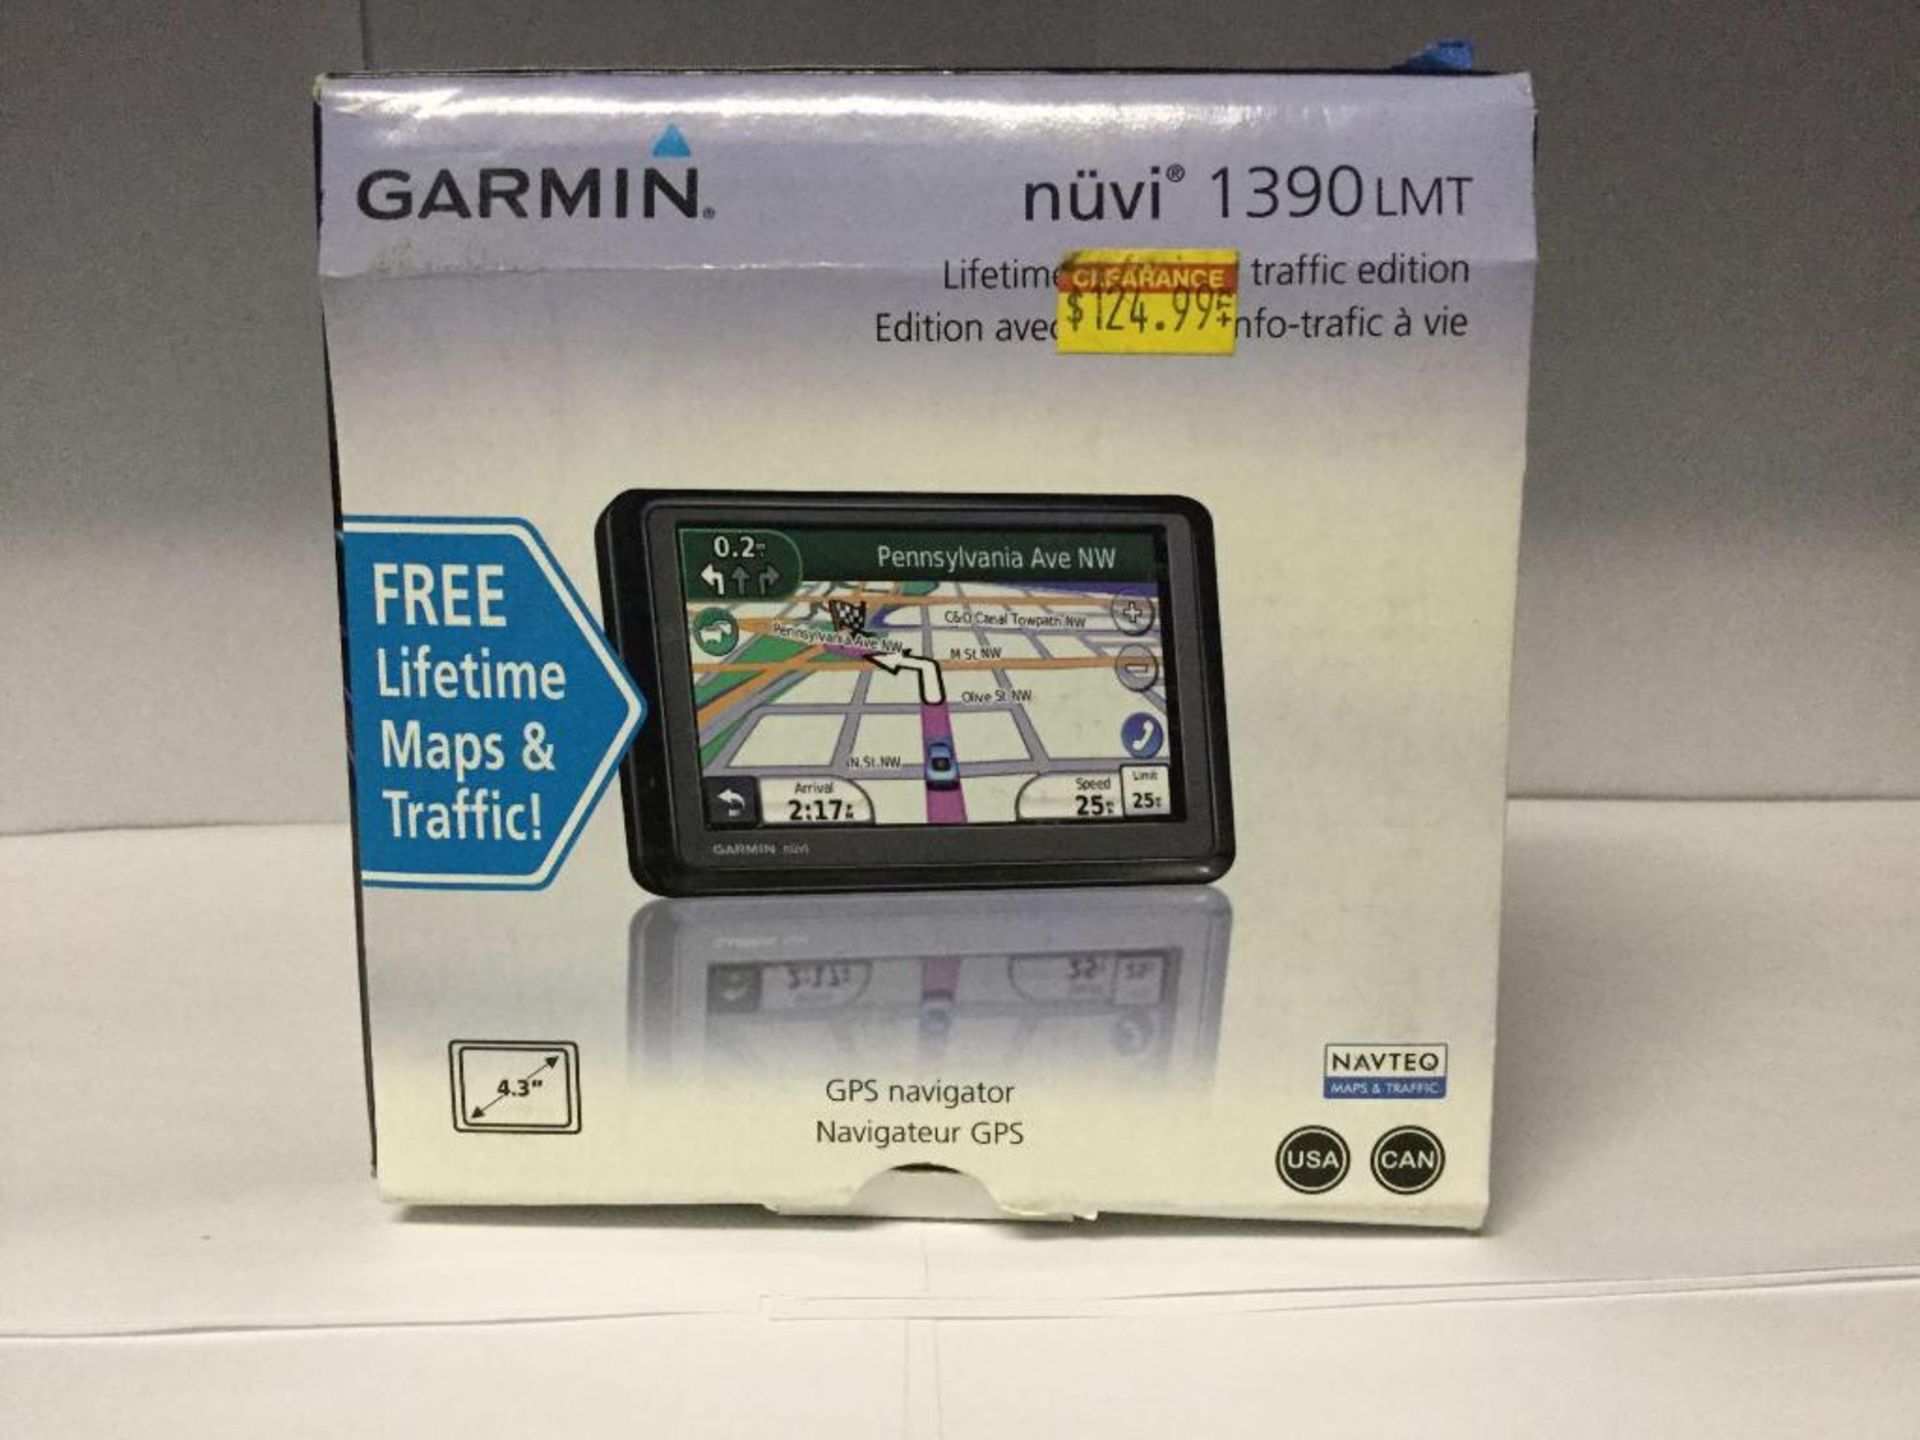 Garmin Nuvi 1390 LMT GPS Navigator with bluetooth technology